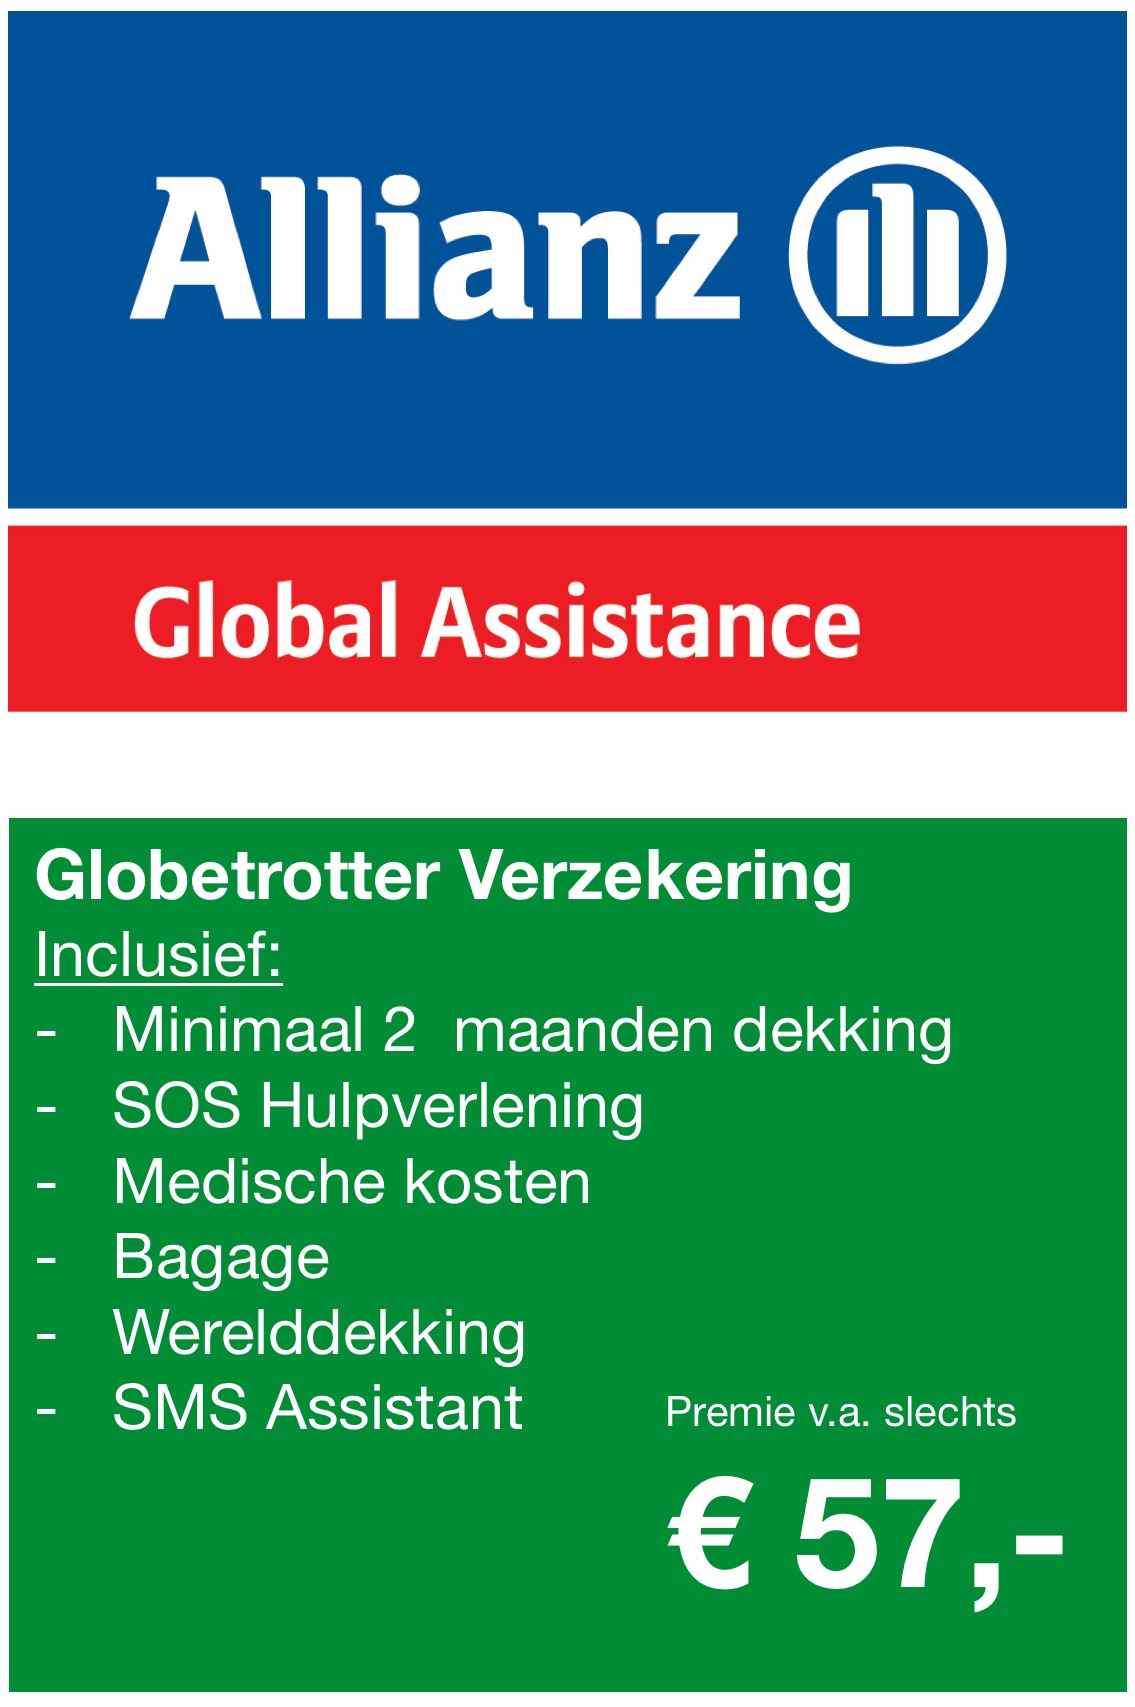 Globetrotter Verzekering Allianz Global Assistance